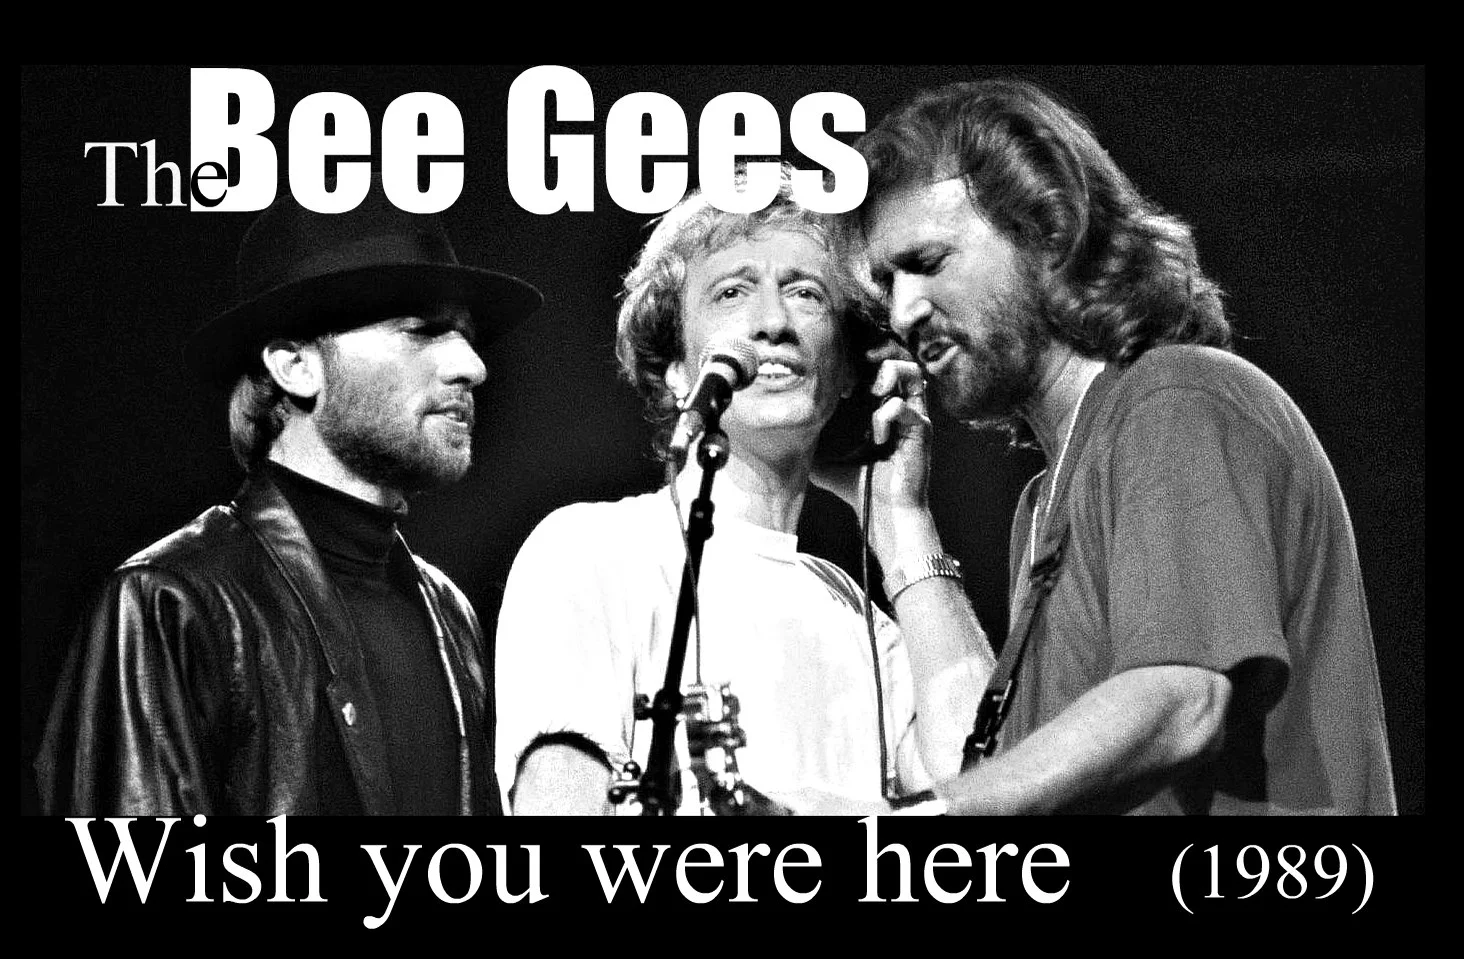 Bee Gees - Wish You Were Here (Tradução).mp4 on Vimeo